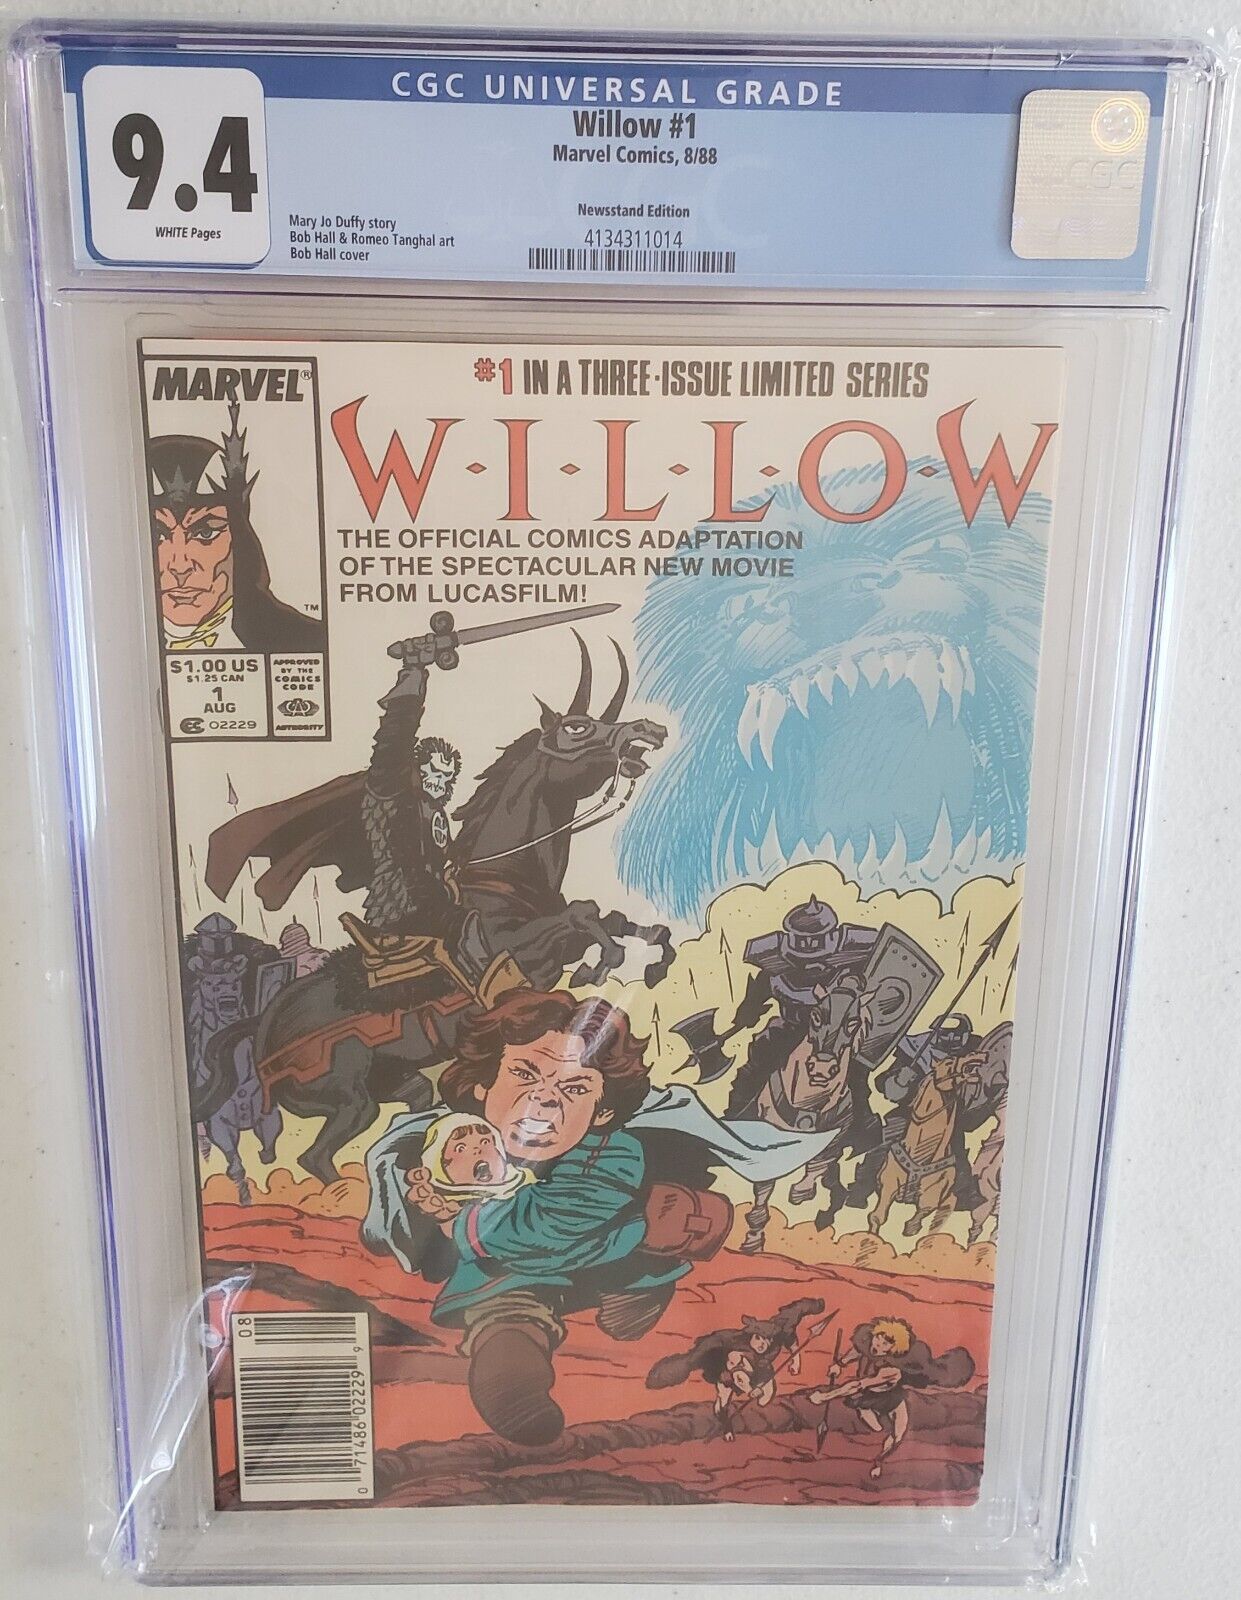 Willow #1 CGC 9.4 (1988) - Newsstand Edition